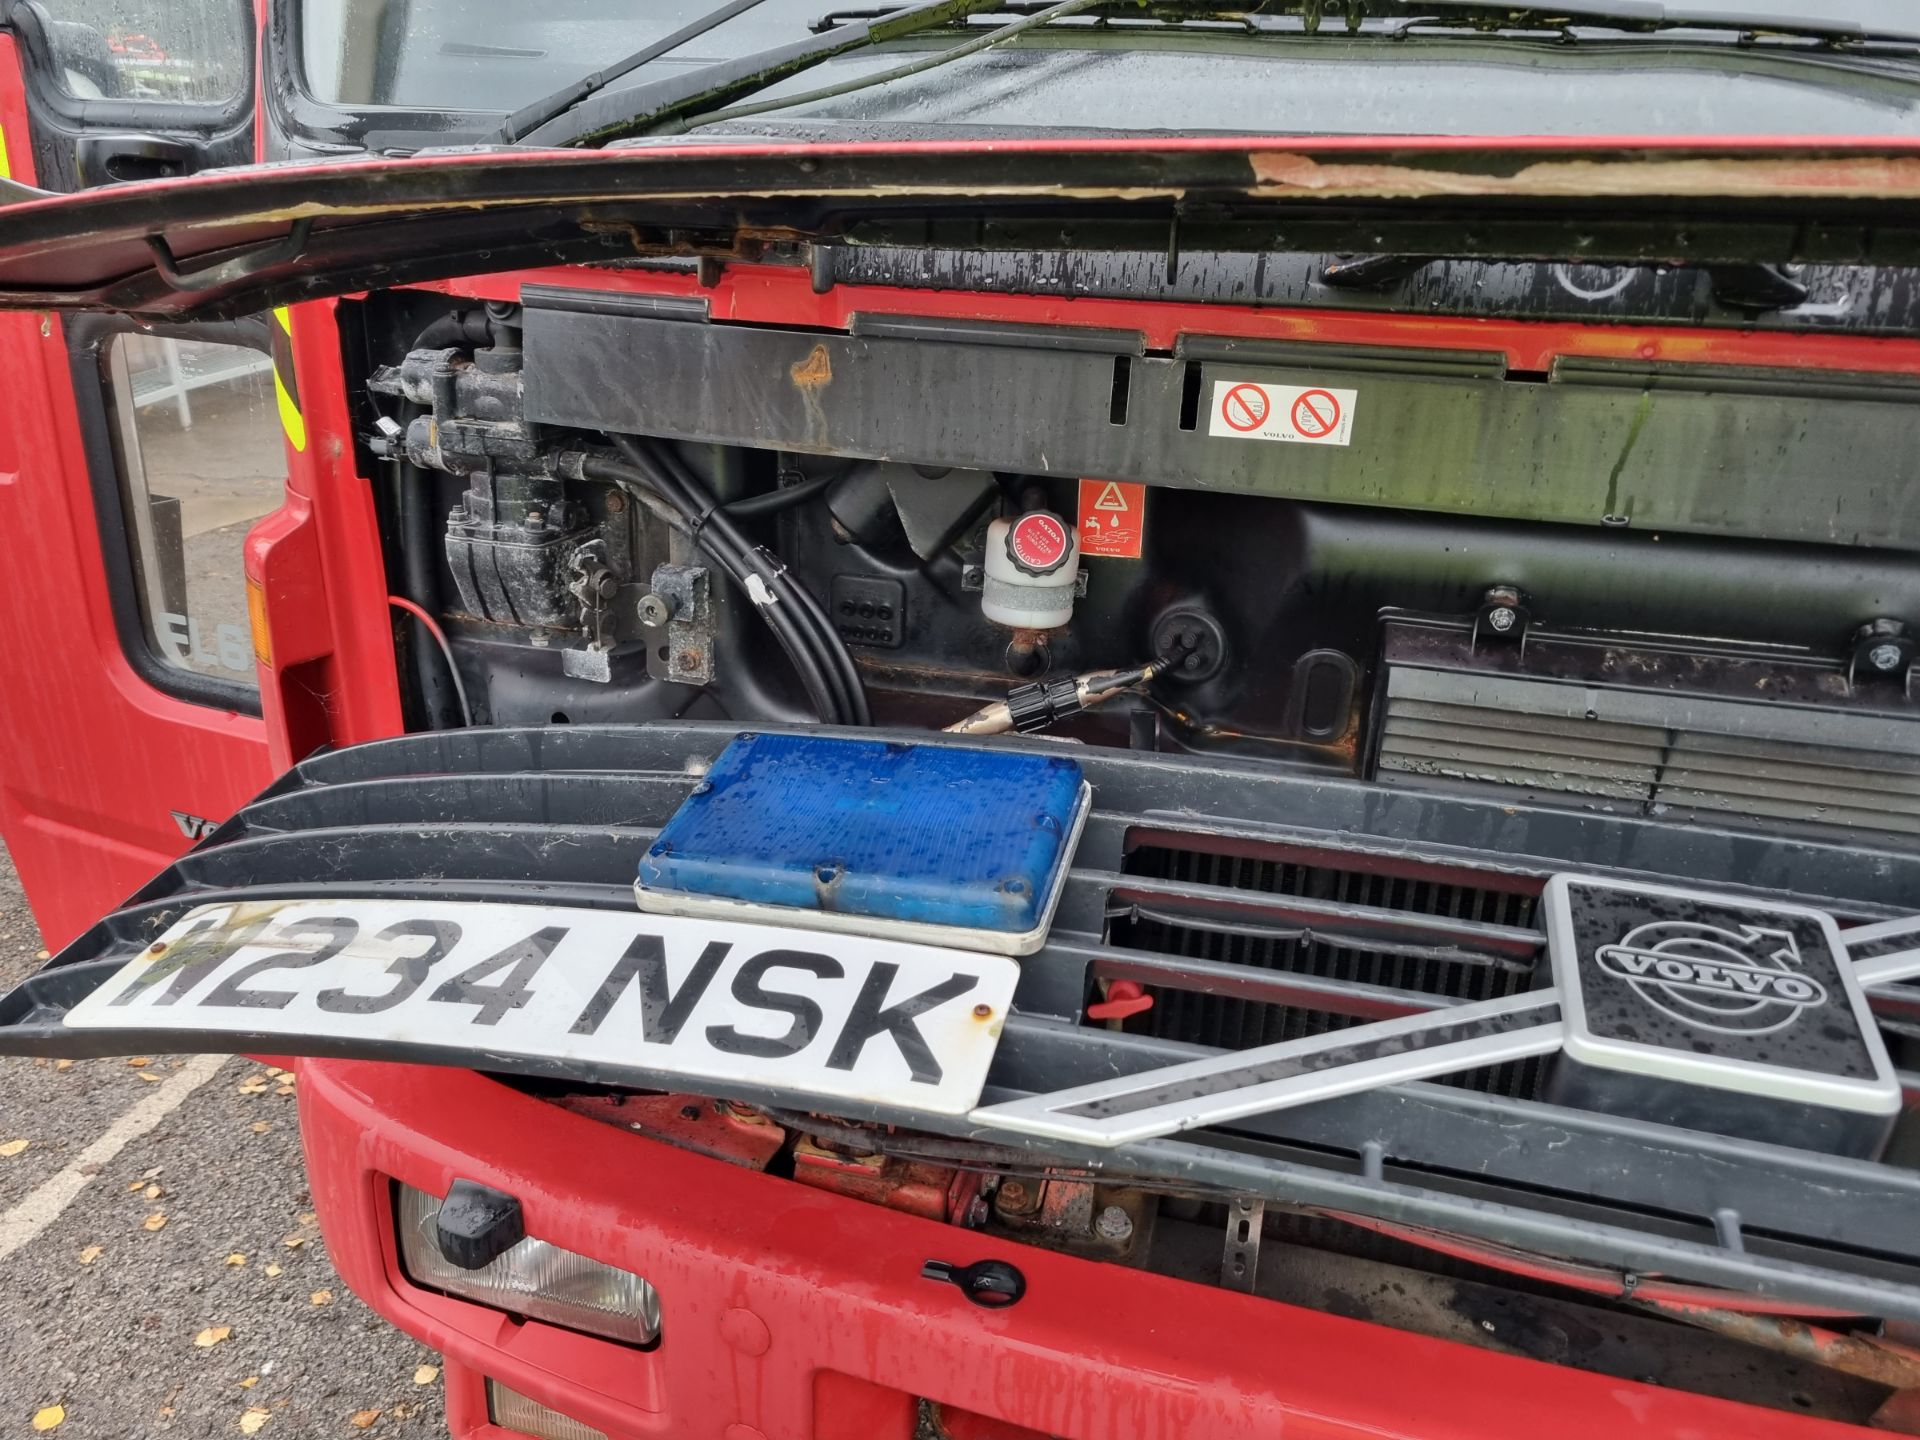 W234 NSK - 2000 Volvo FL6-14 Fire Engine, Diesel, 5480cc, 82770Km, Red - Image 6 of 31